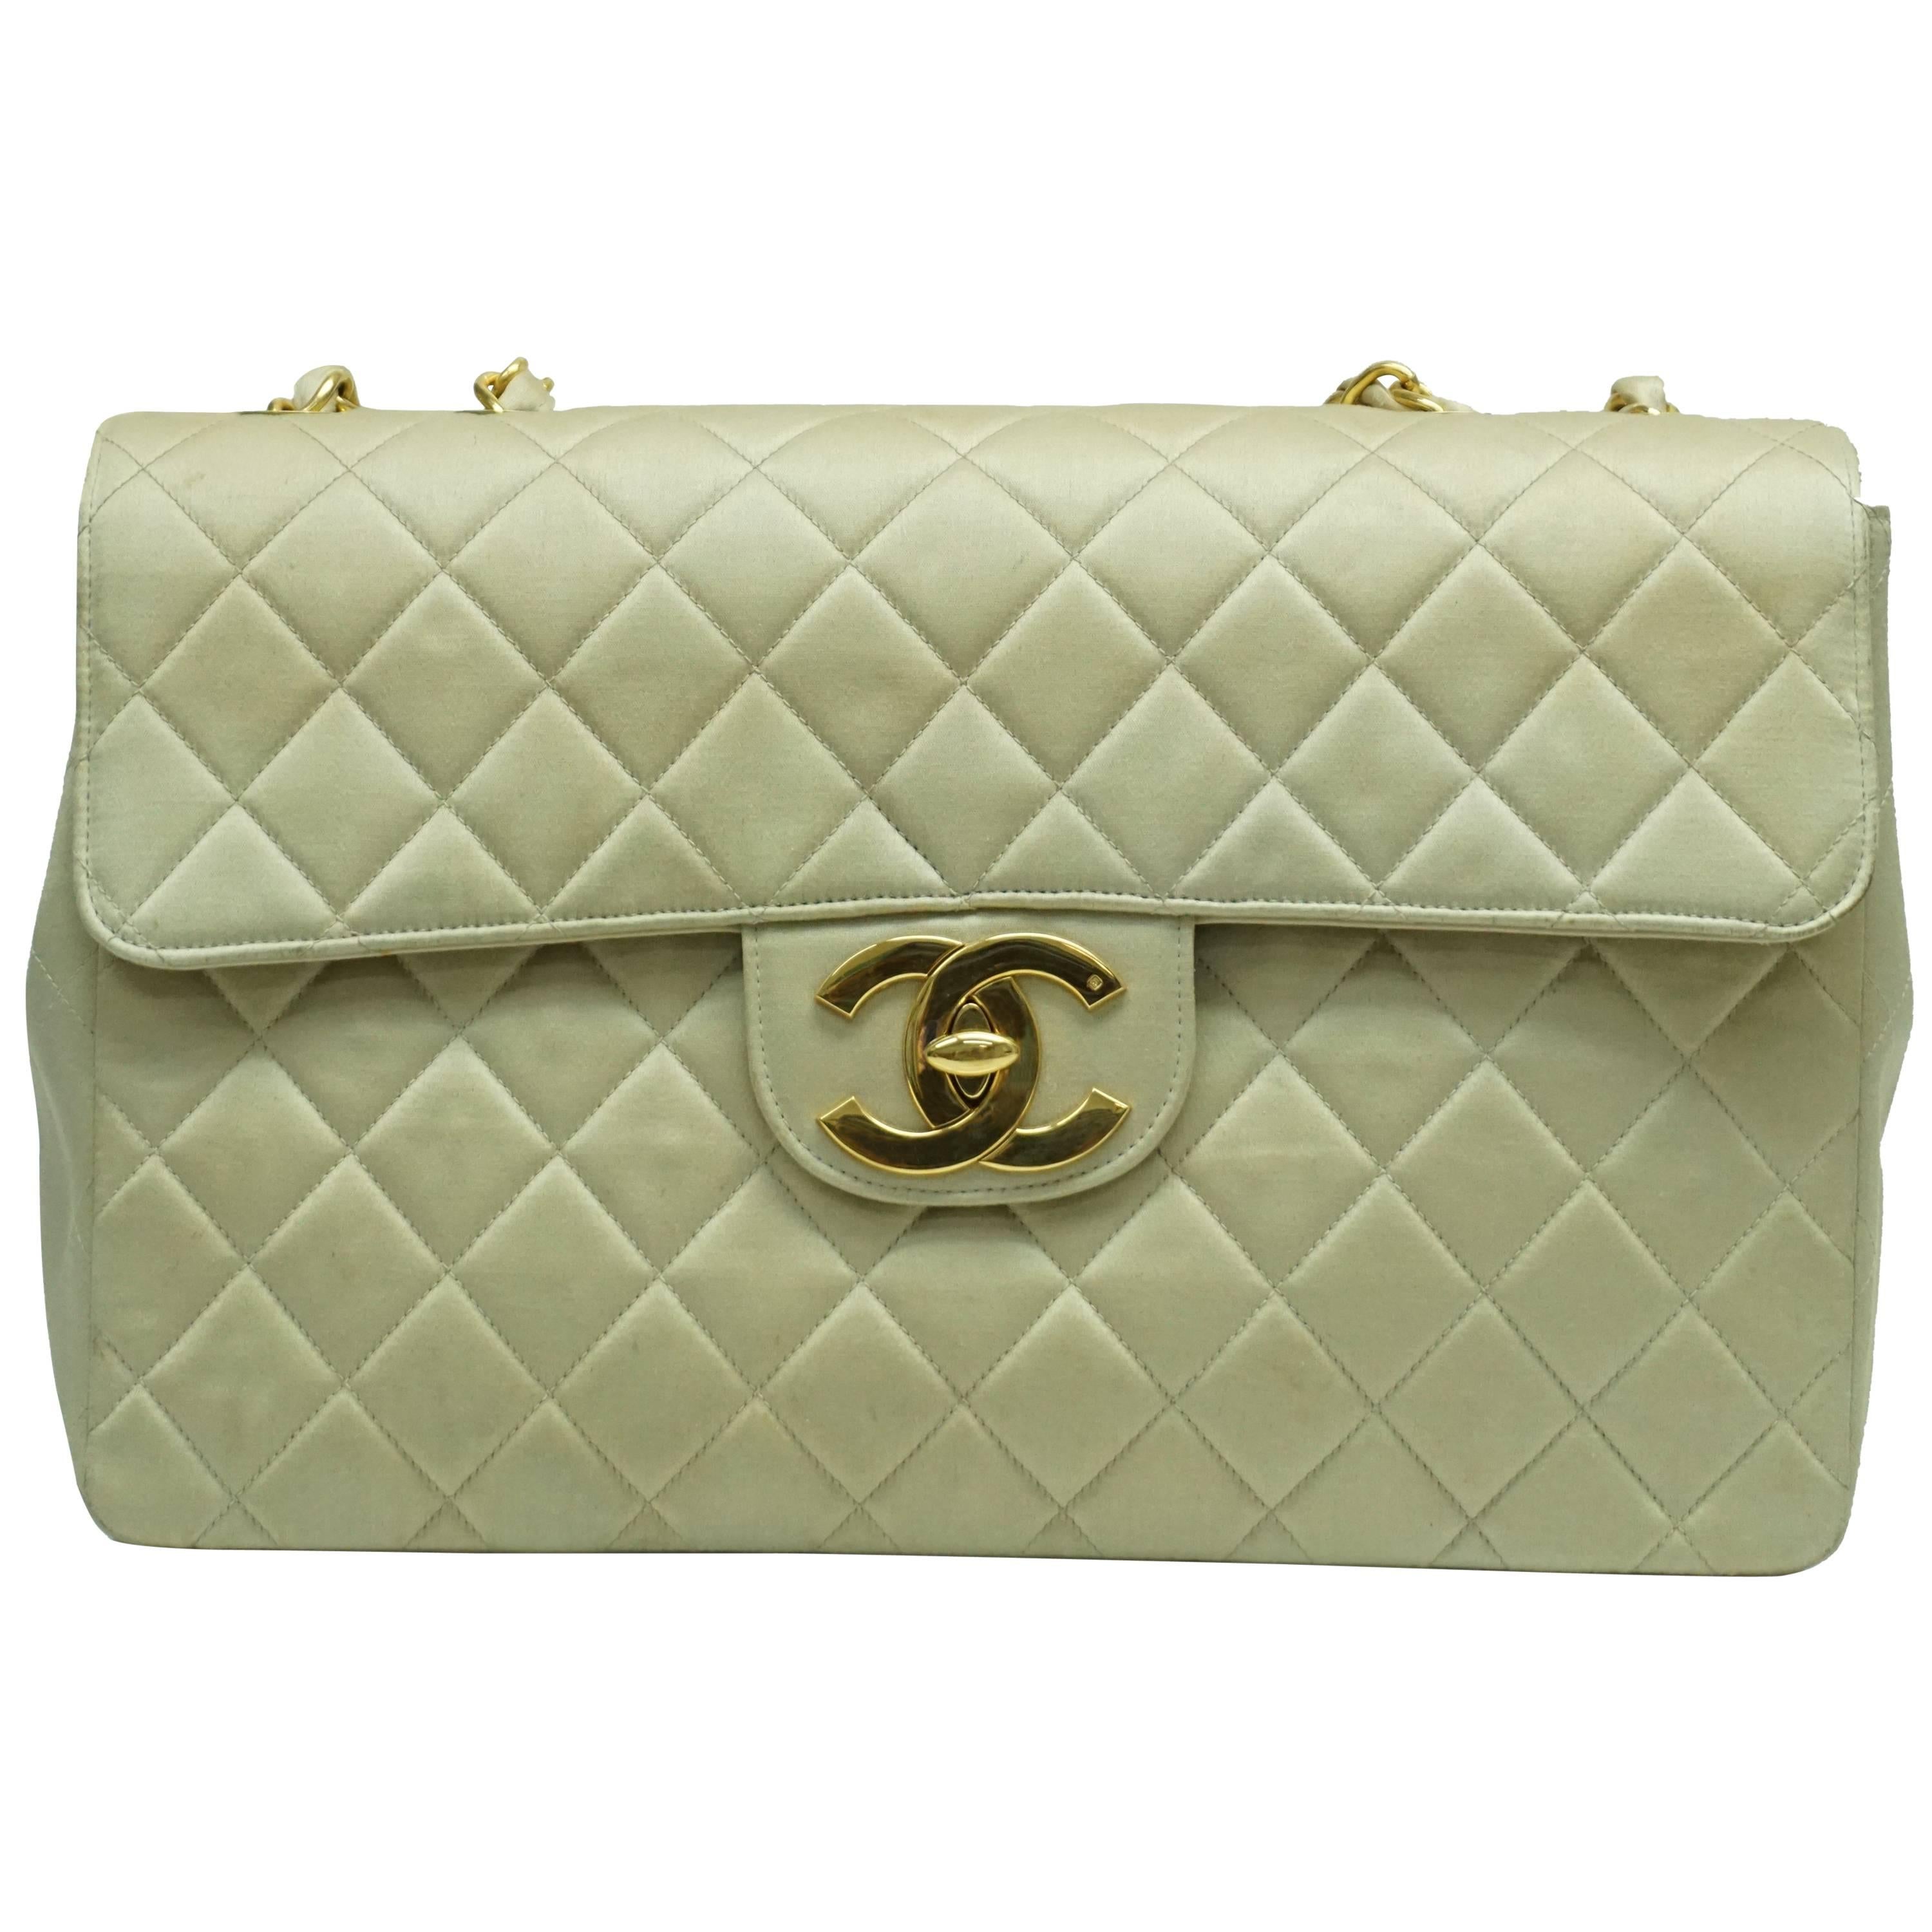 Chanel Gold Fabric Maxi Single Flap Handbag - GHW - Early 90's